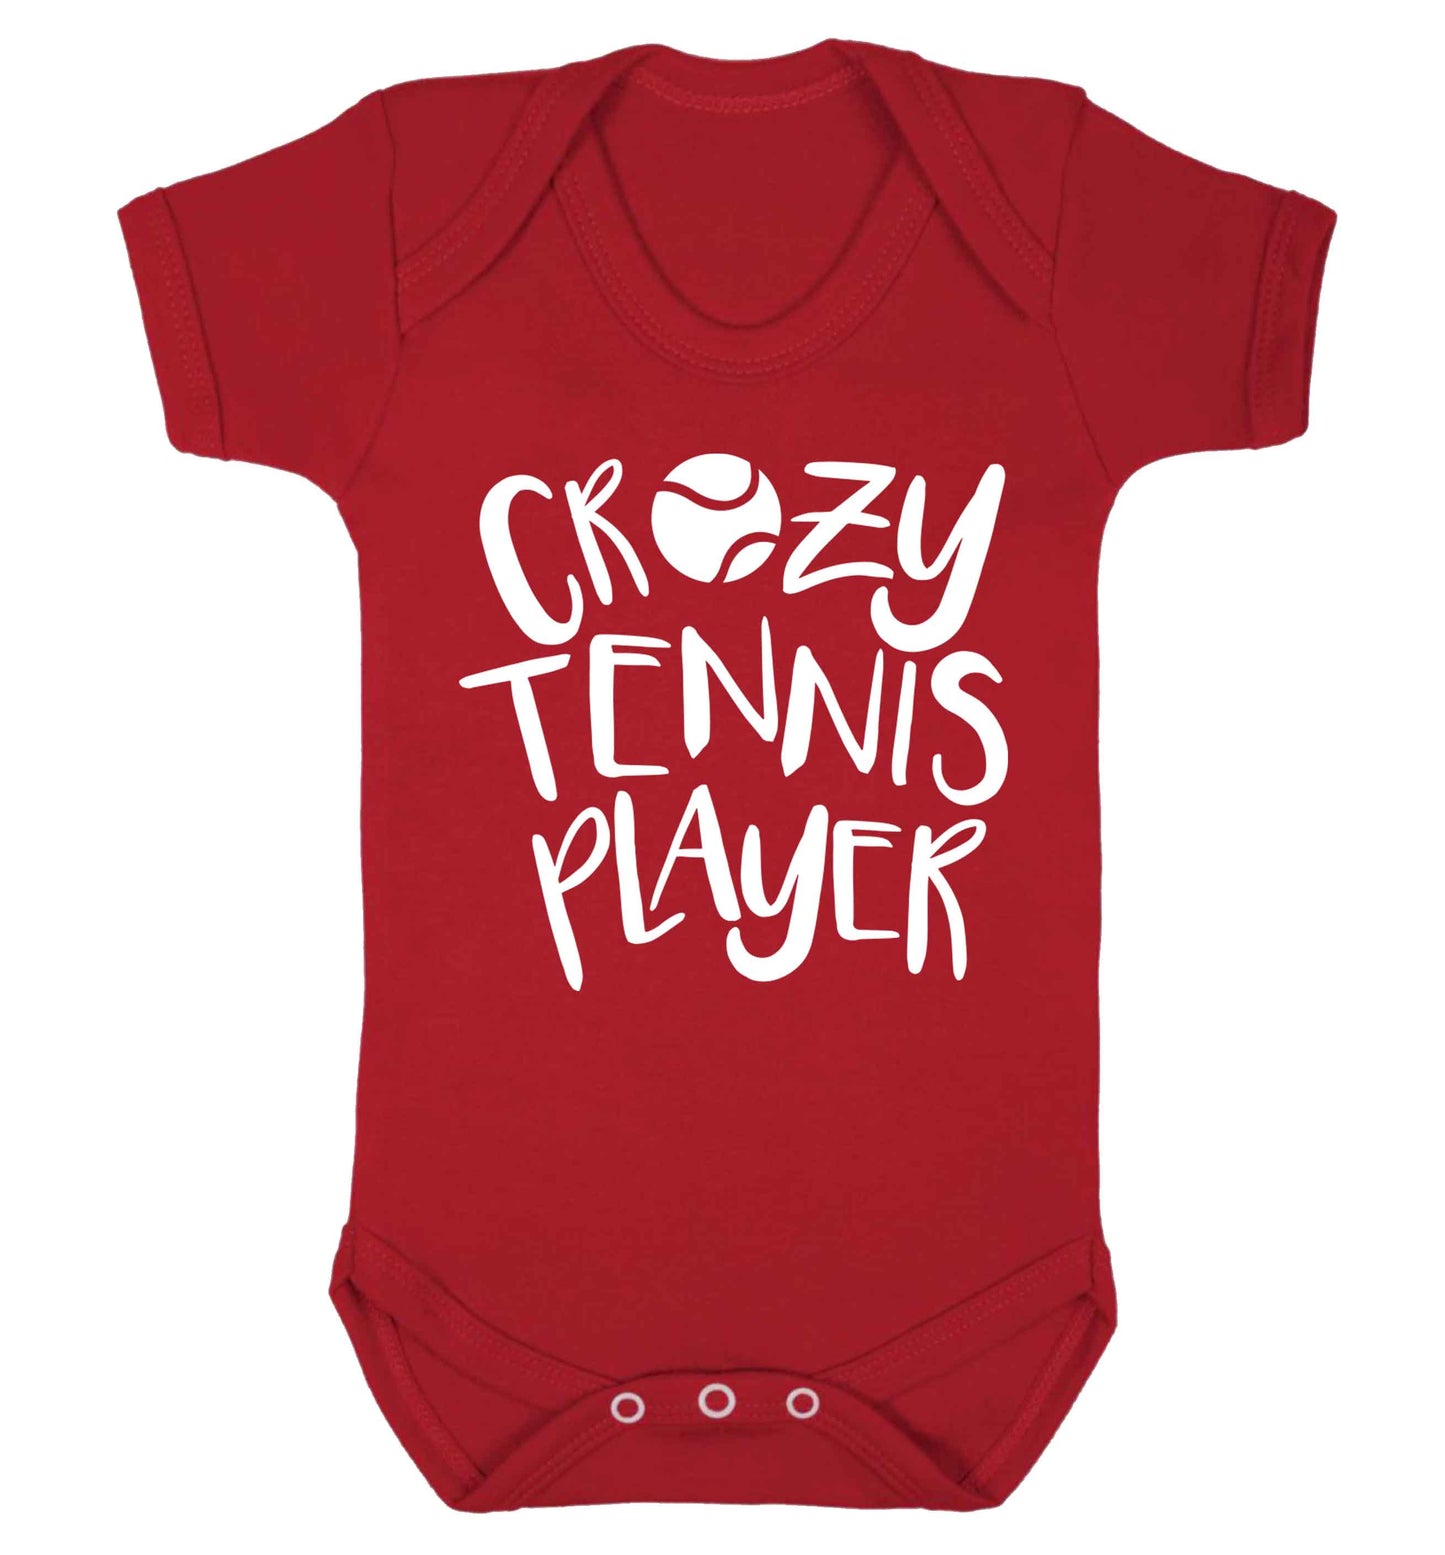 Crazy tennis player Baby Vest red 18-24 months